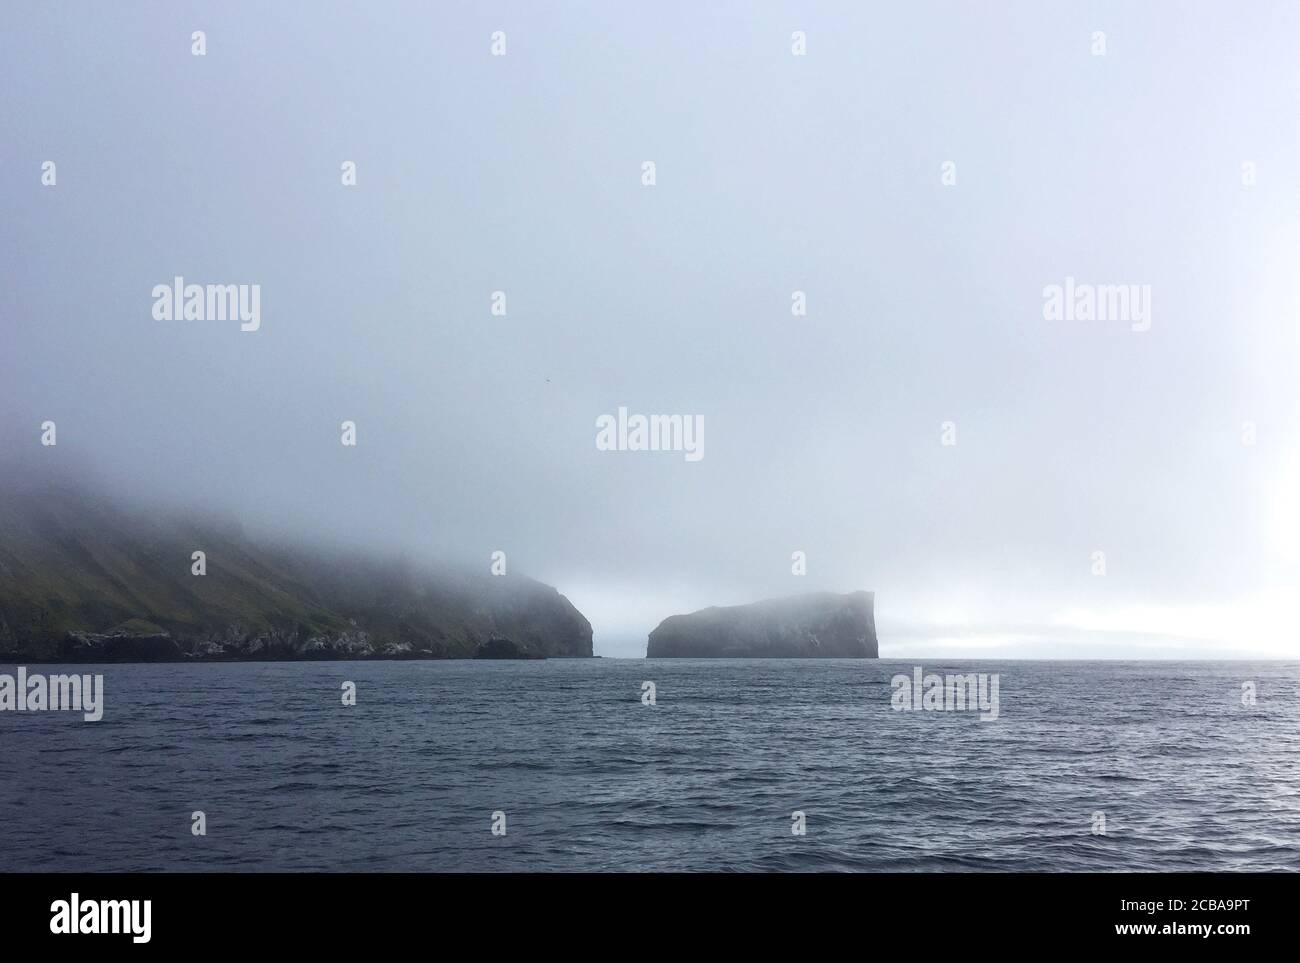 uninhabited volcanic island in mist, New Zealand, Antipodes islands Stock Photo